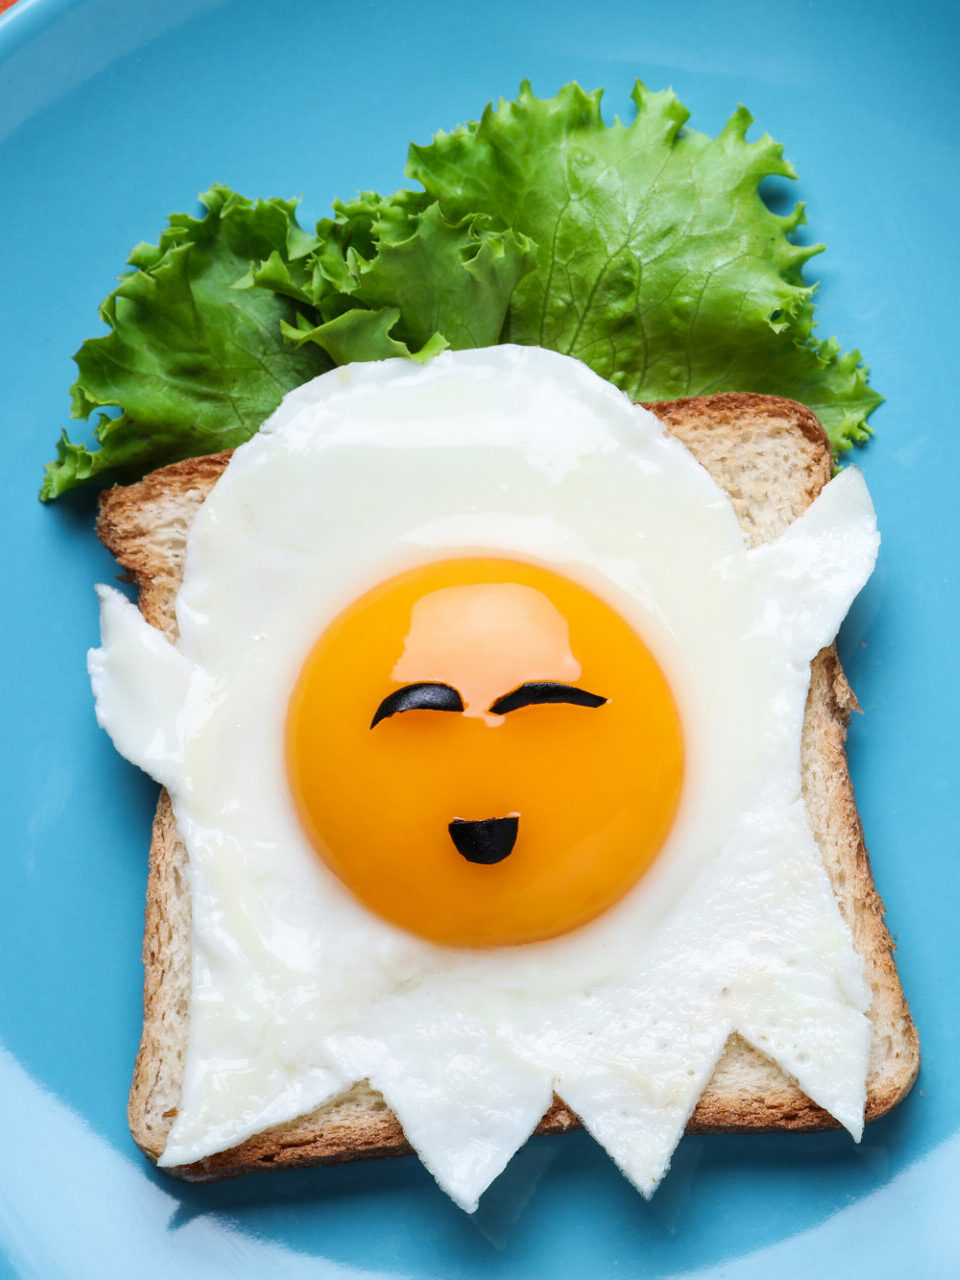 fried egg on toast cut to look like a cute ghost